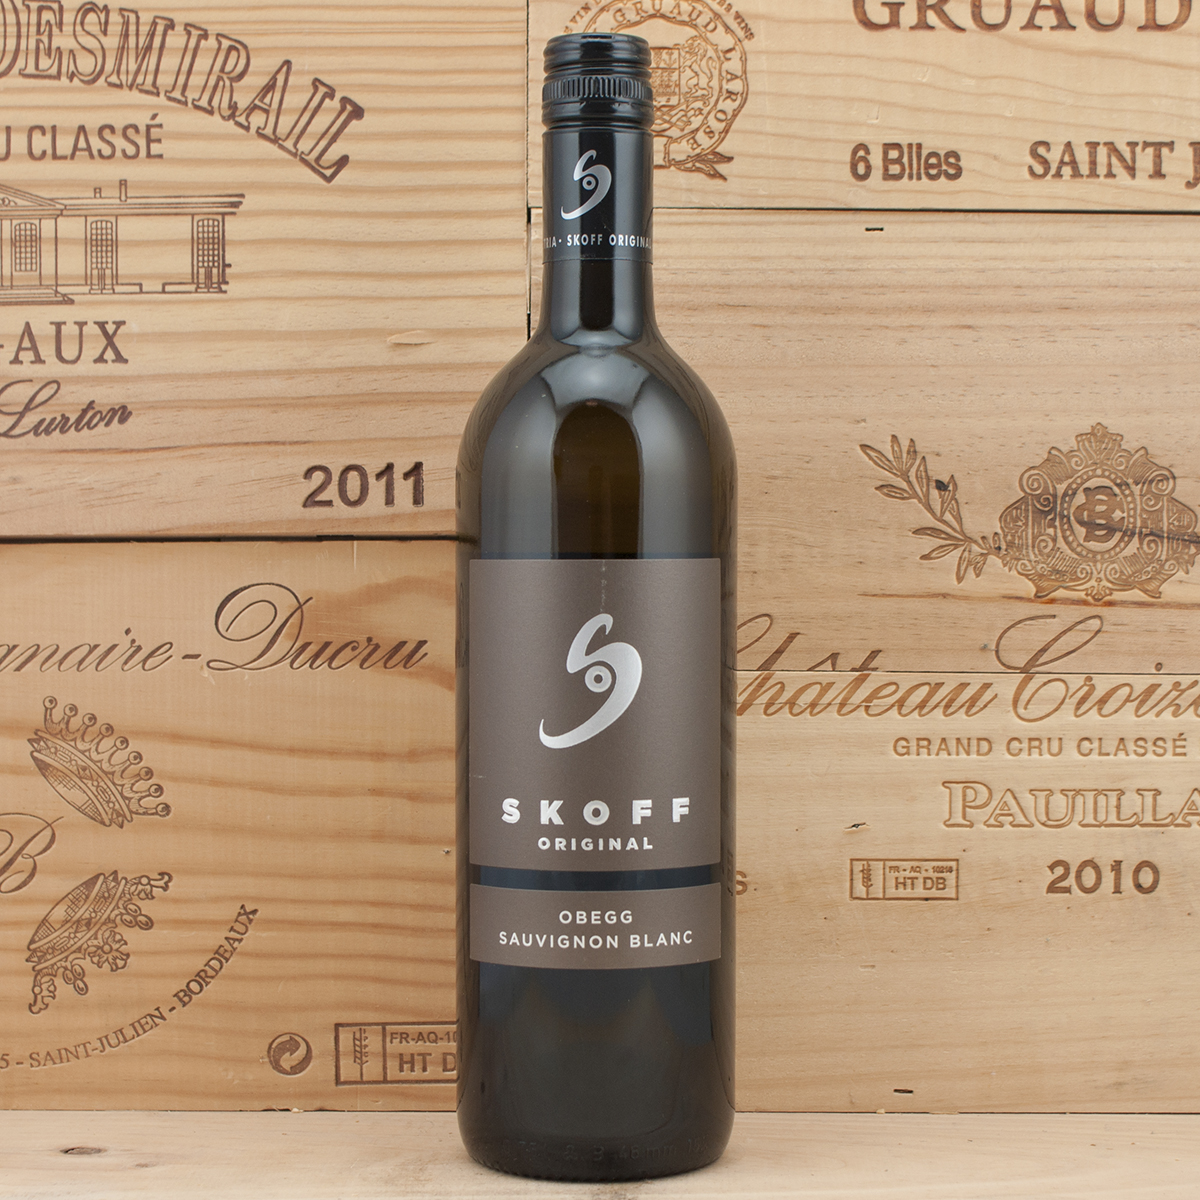 2014 Sauvignon Blanc Obegg Skoff